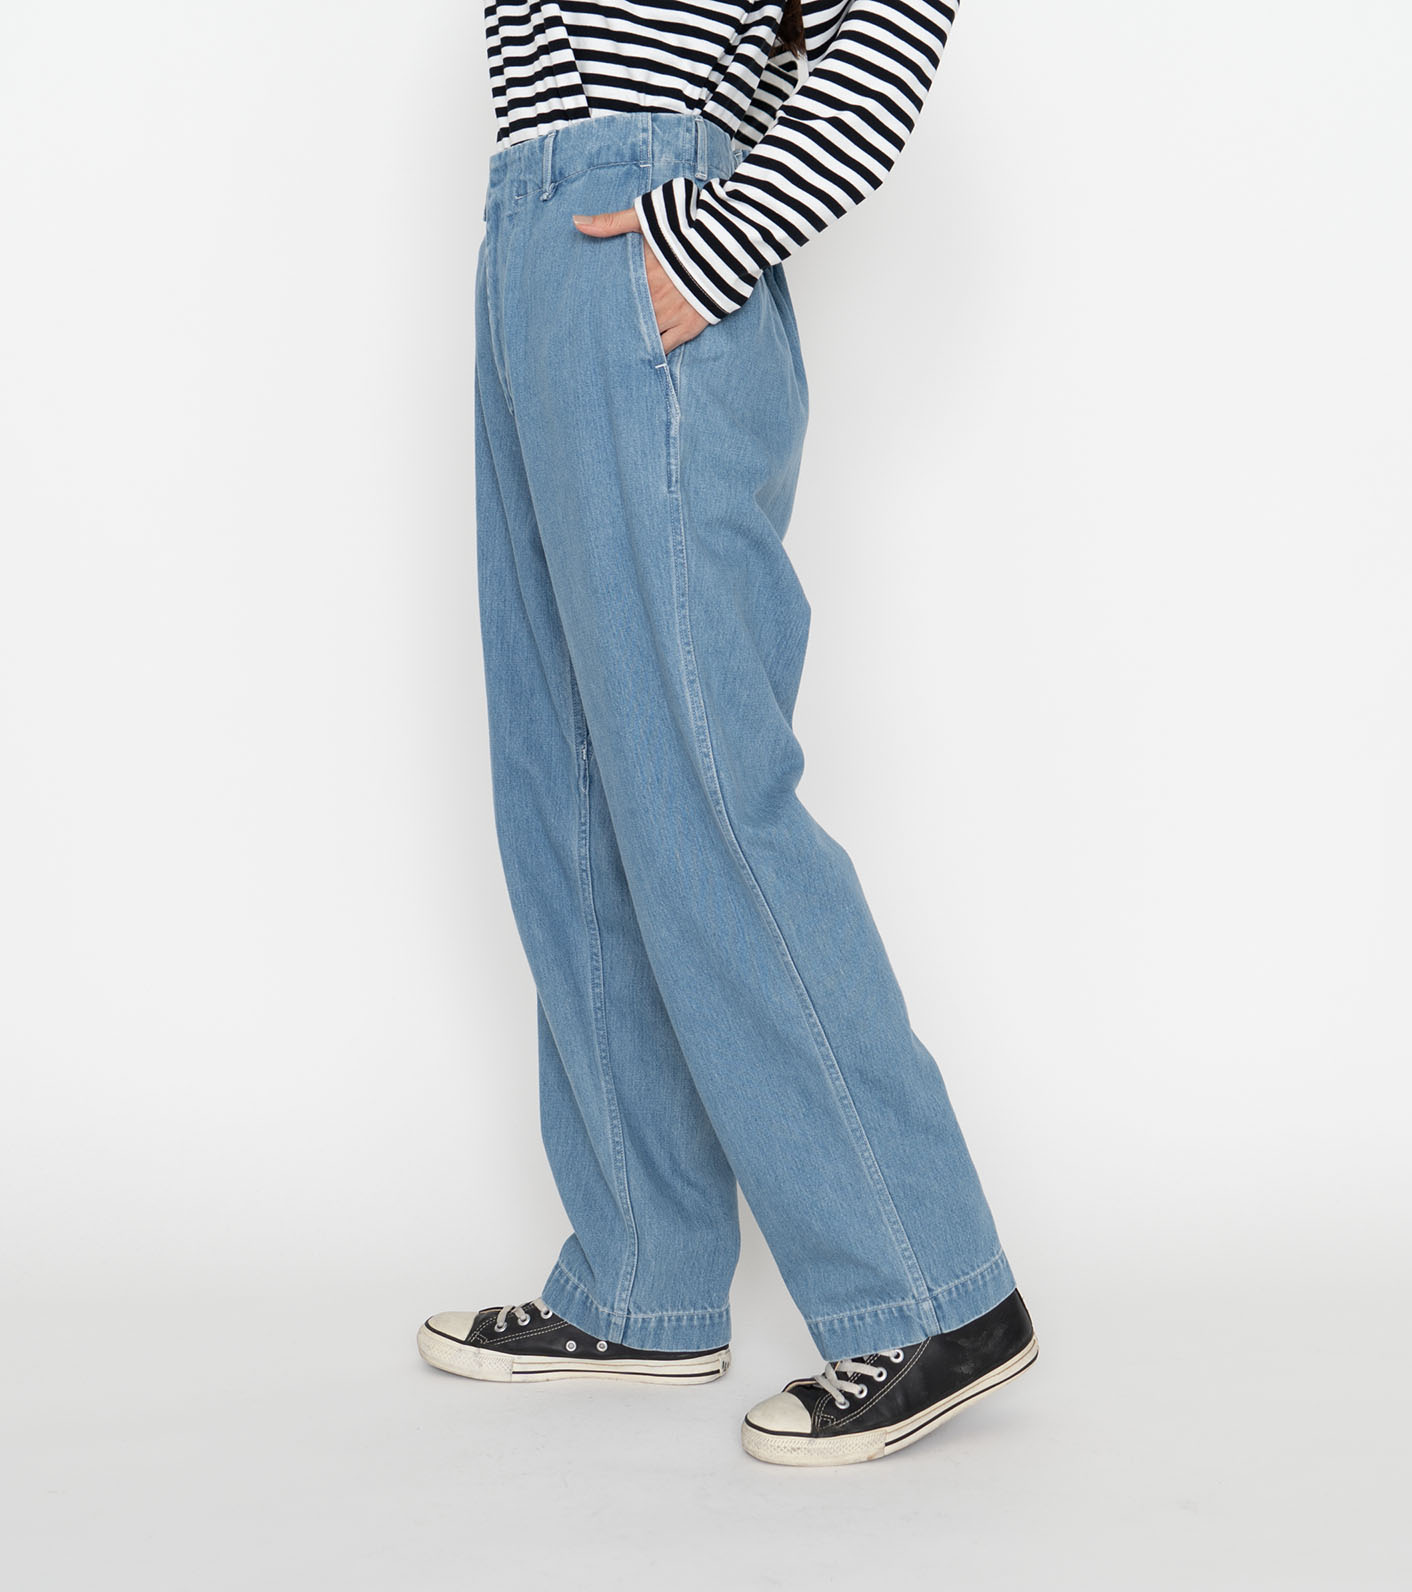 wide denim pants / high waist jeans